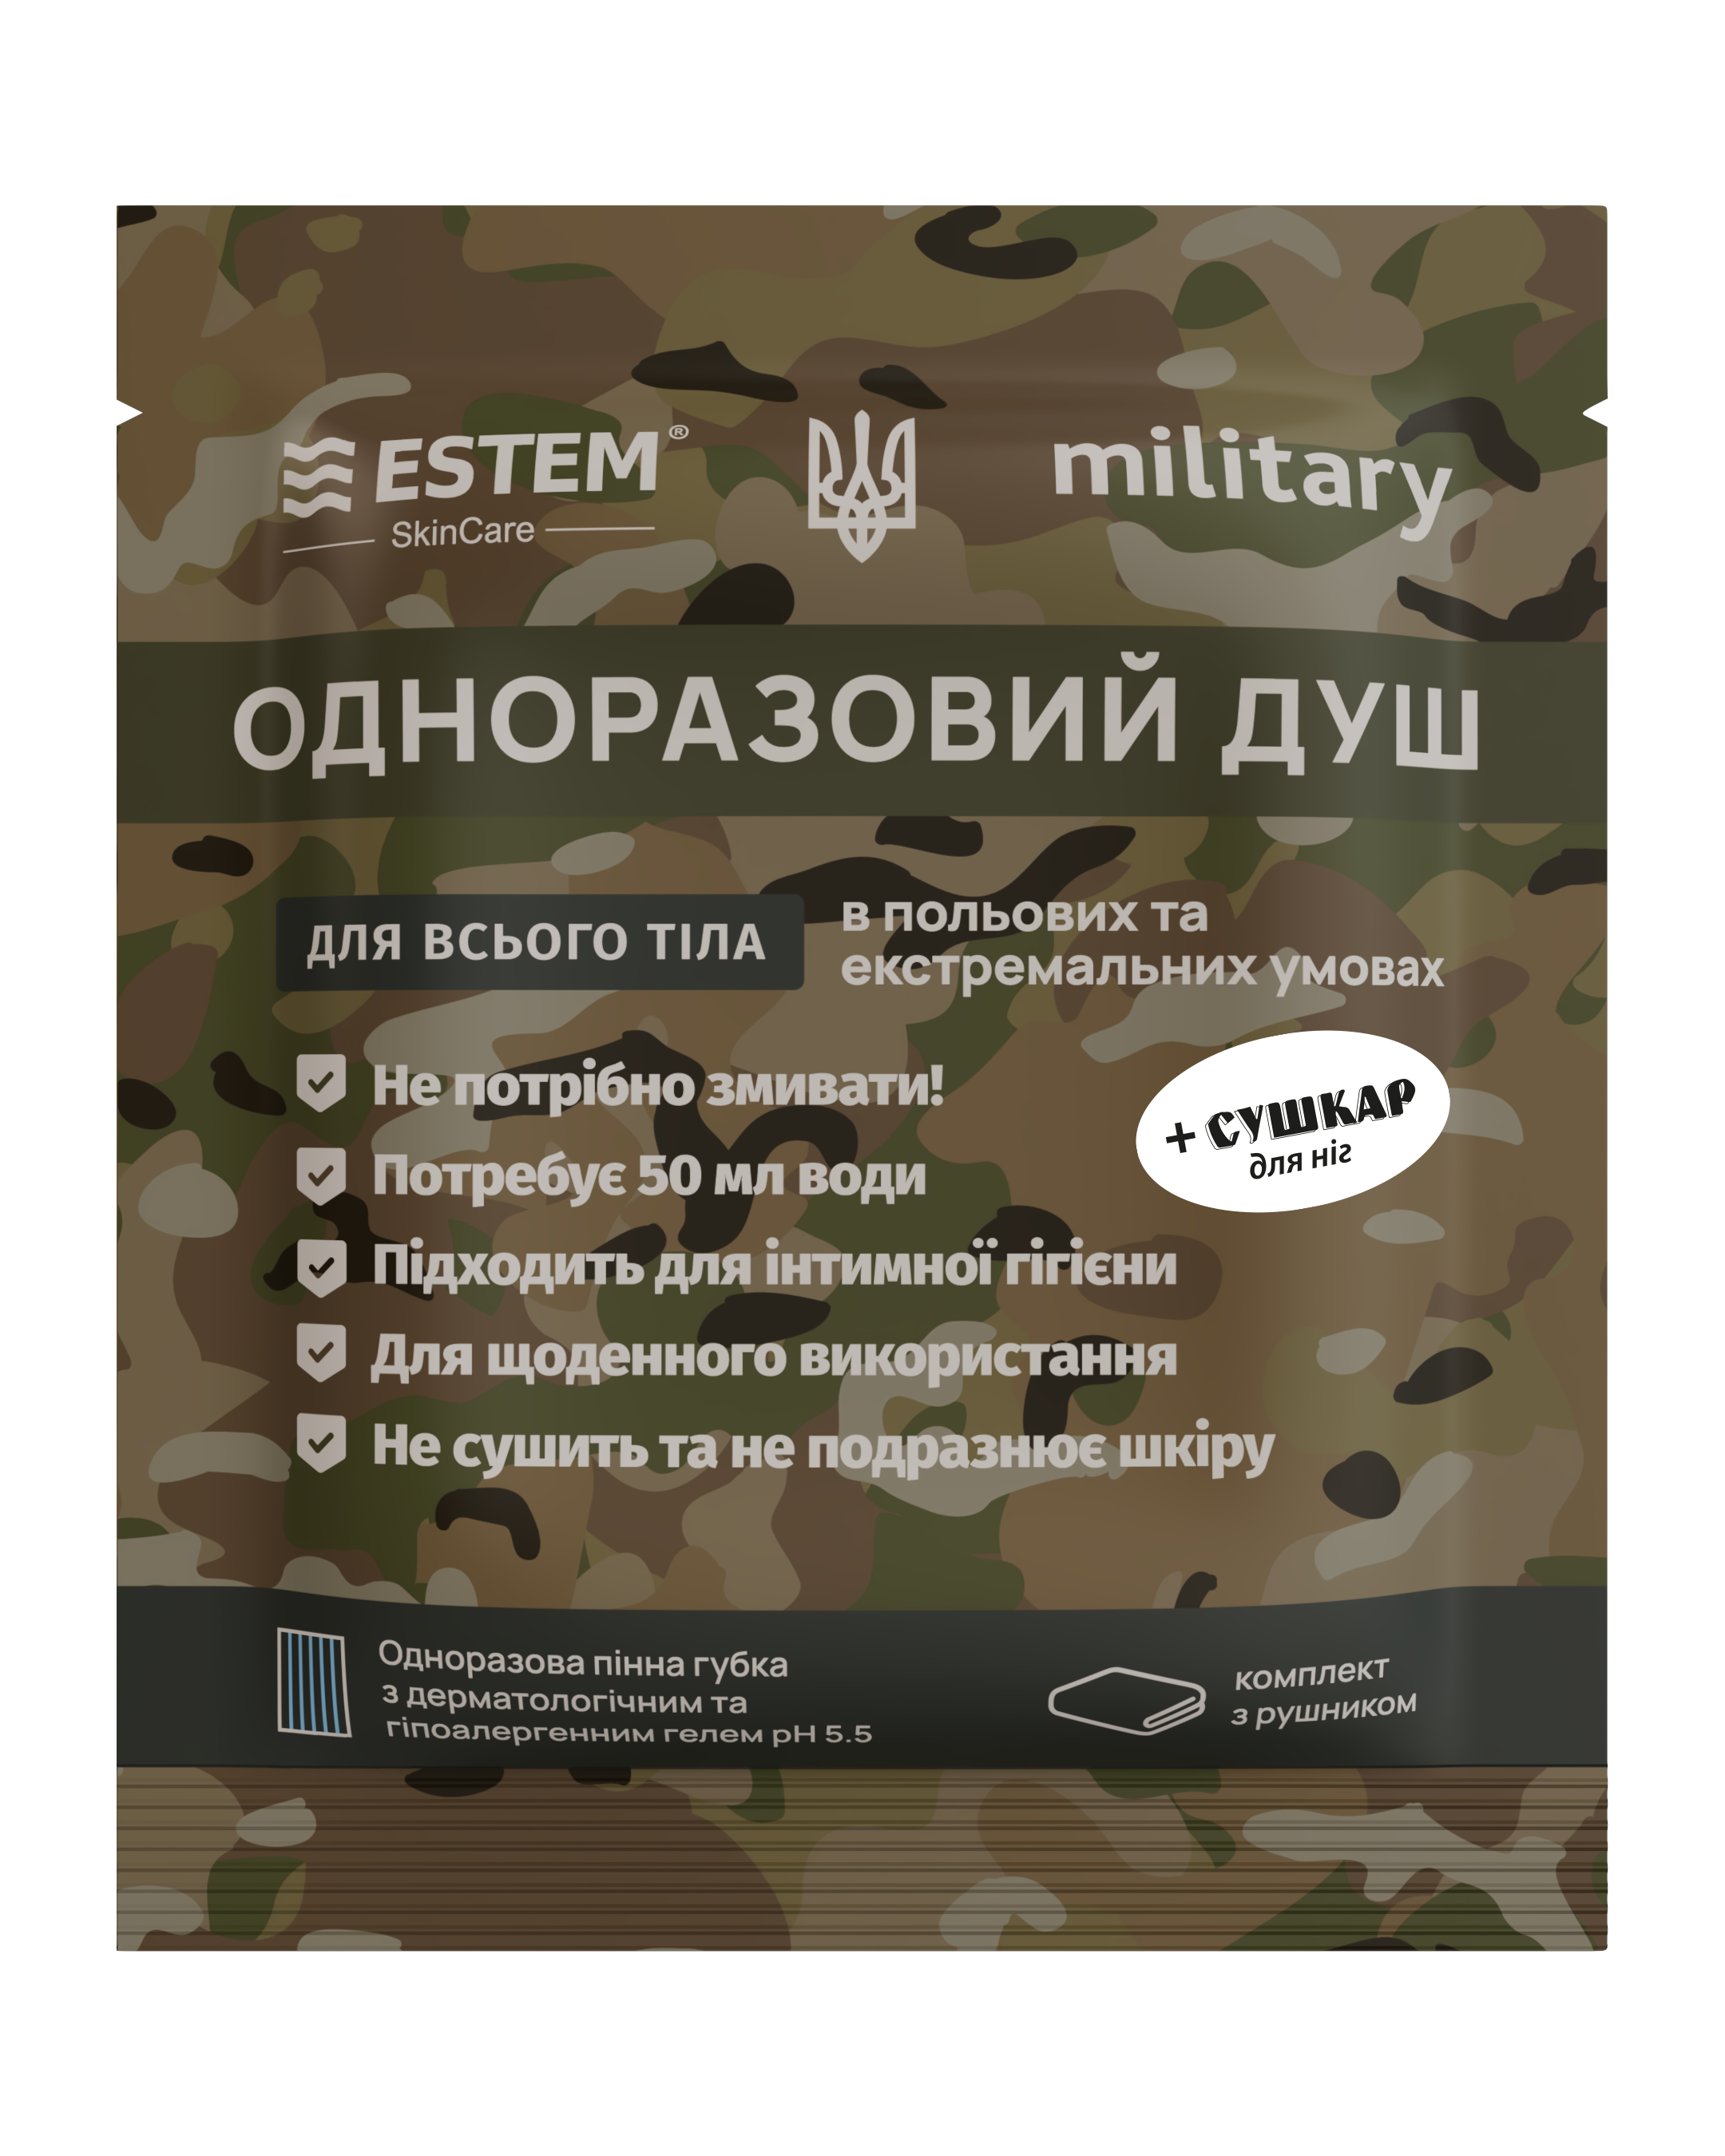 Сухой душ для военных MILITARY + СУШКАР